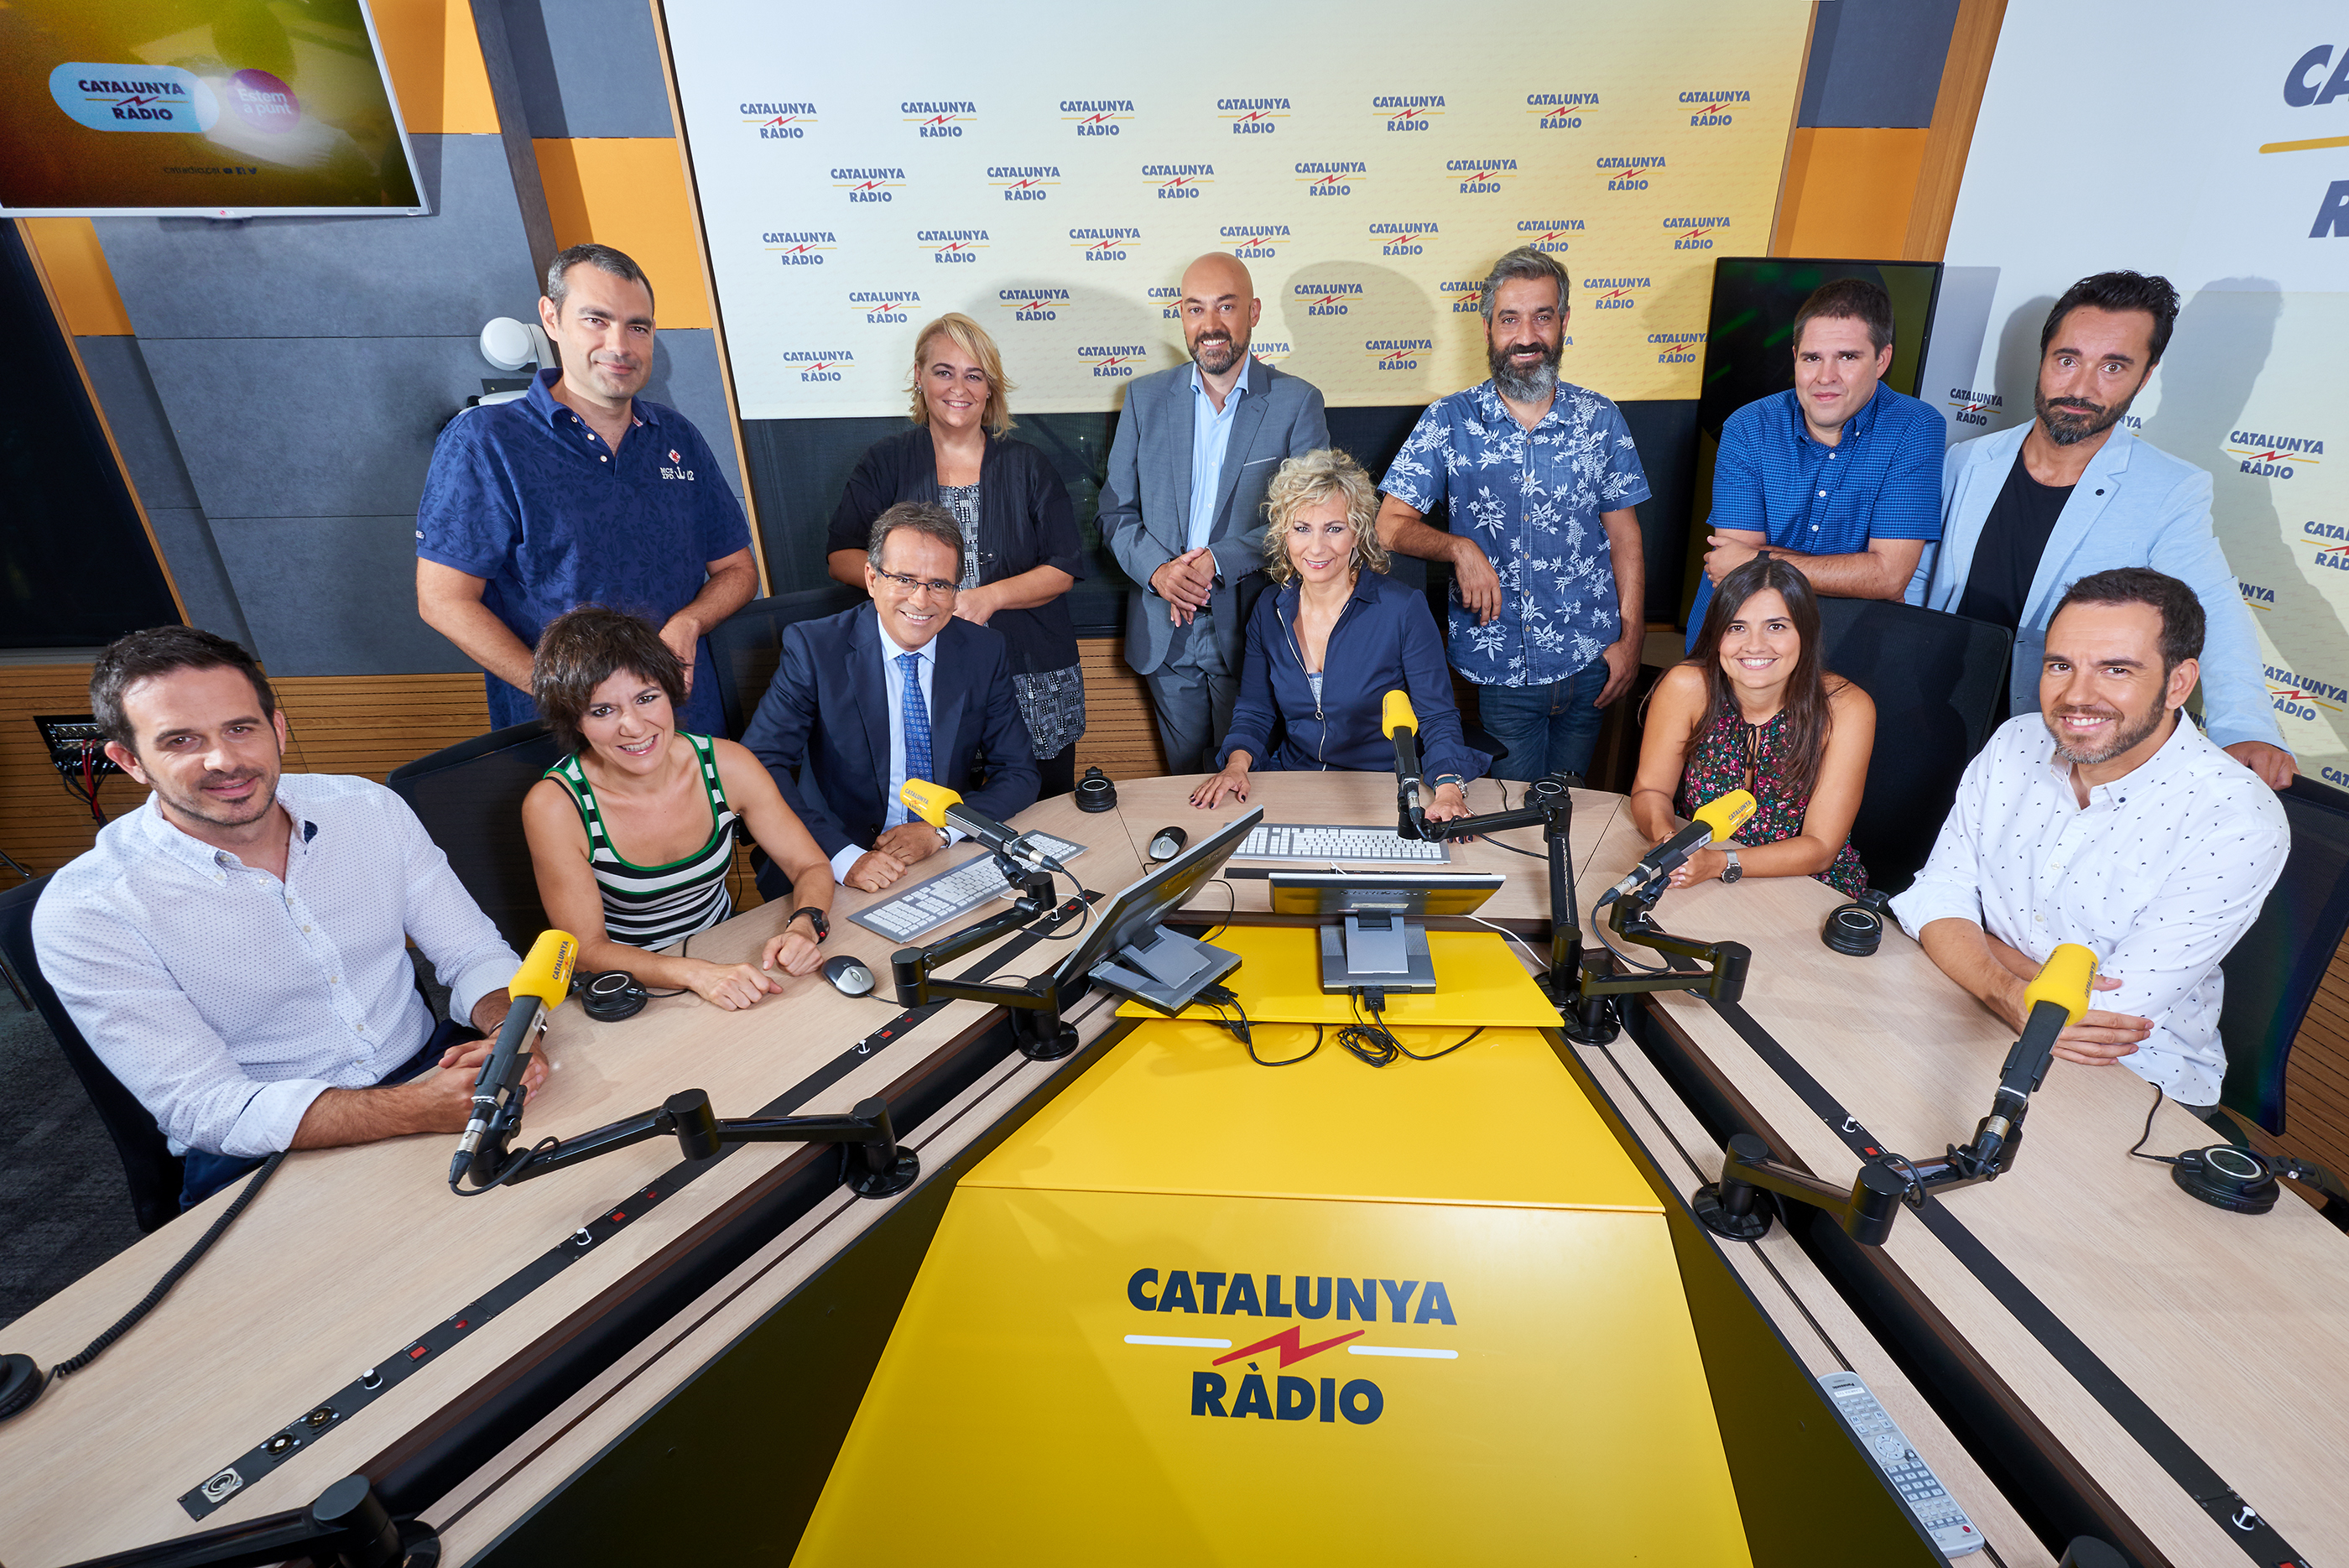 Members of the Catalunya Radio team earlier this year (by ACN)